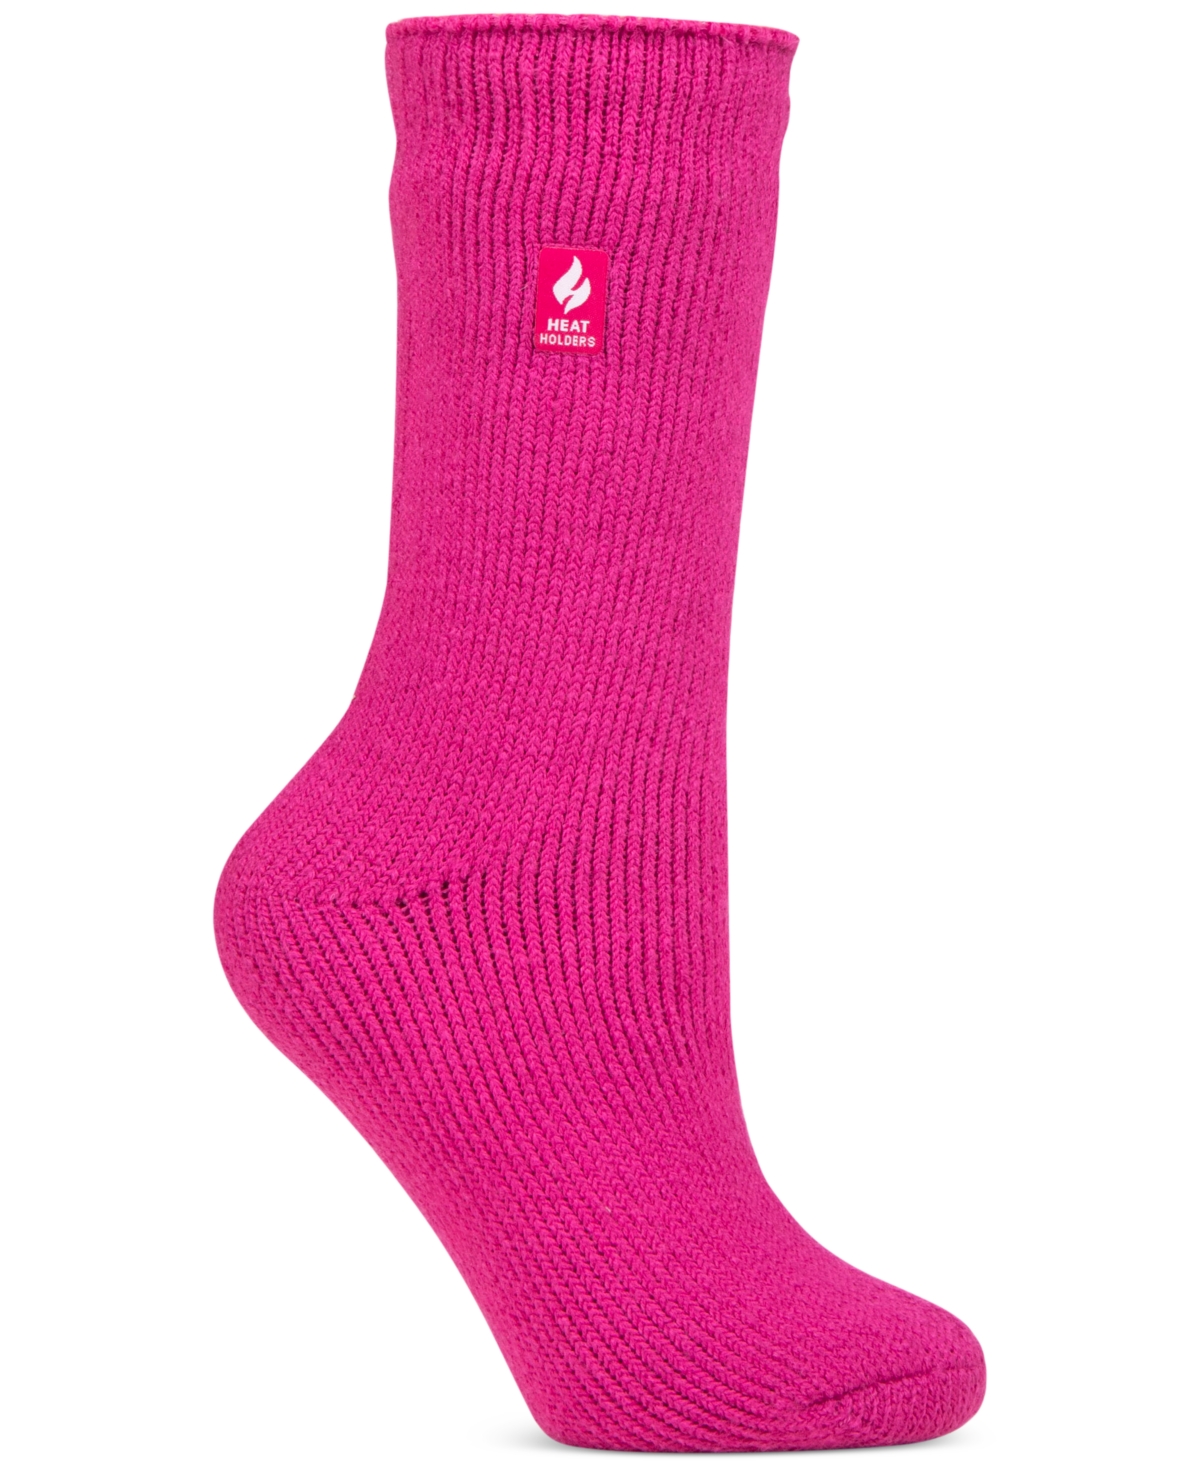 Women's Lite Dahlia Solid Crew Socks - Bright Pin